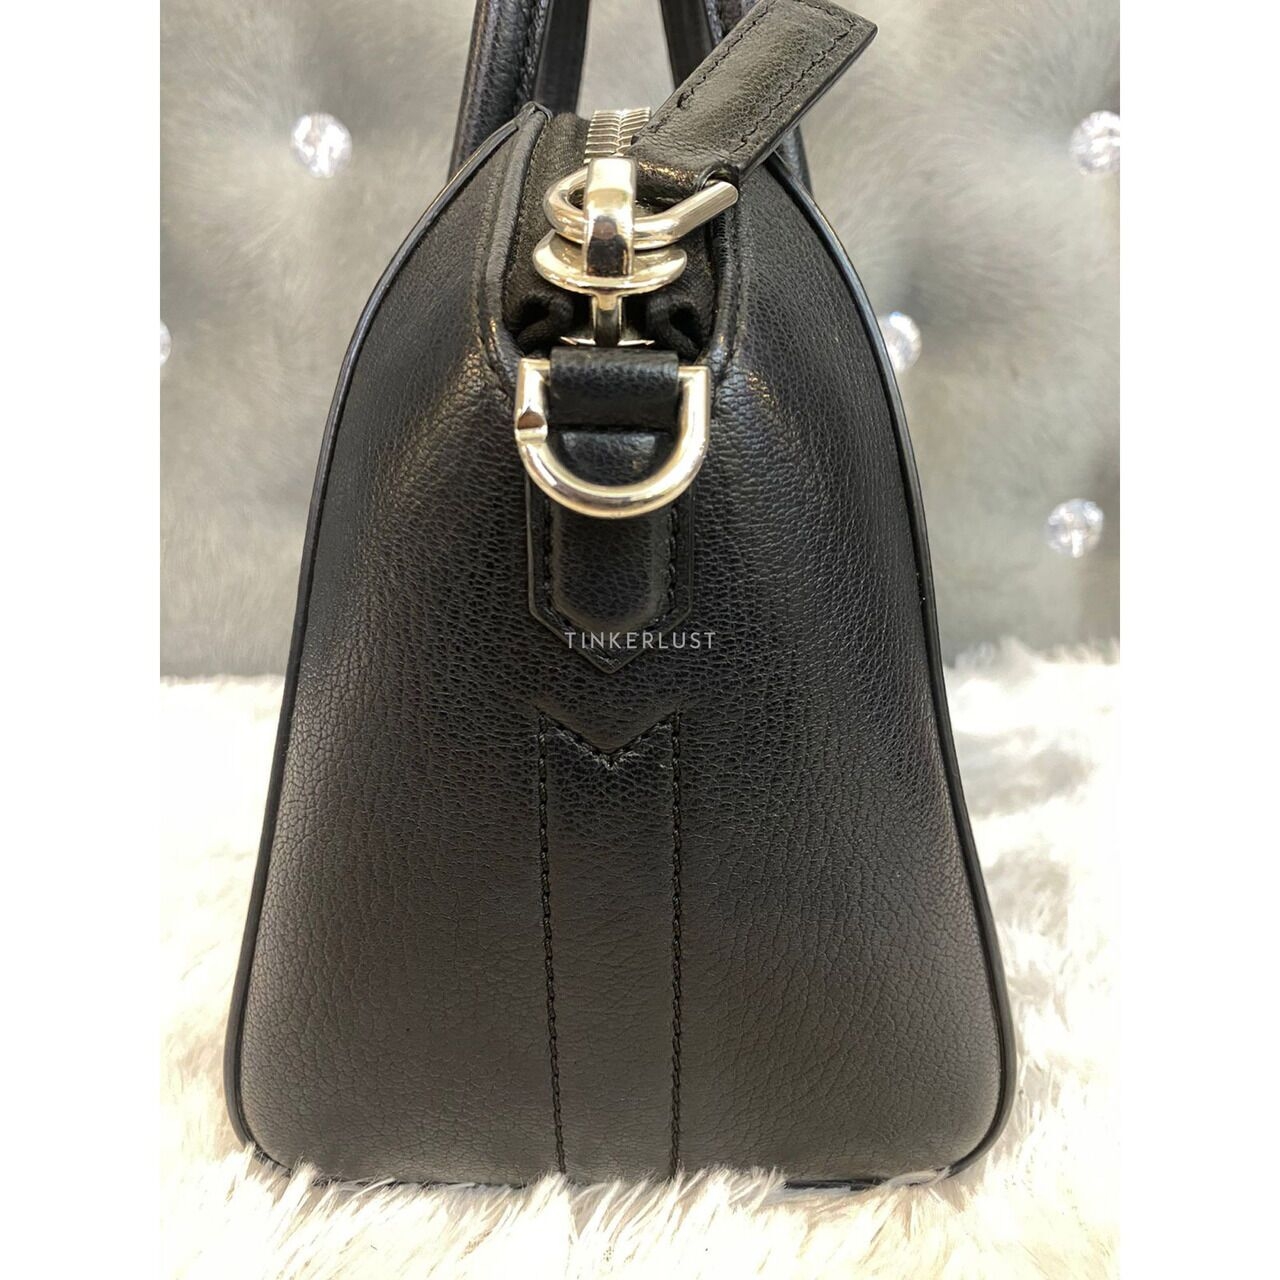 Givenchy Antigona Mini Bag Black SHW 2018 Satchel